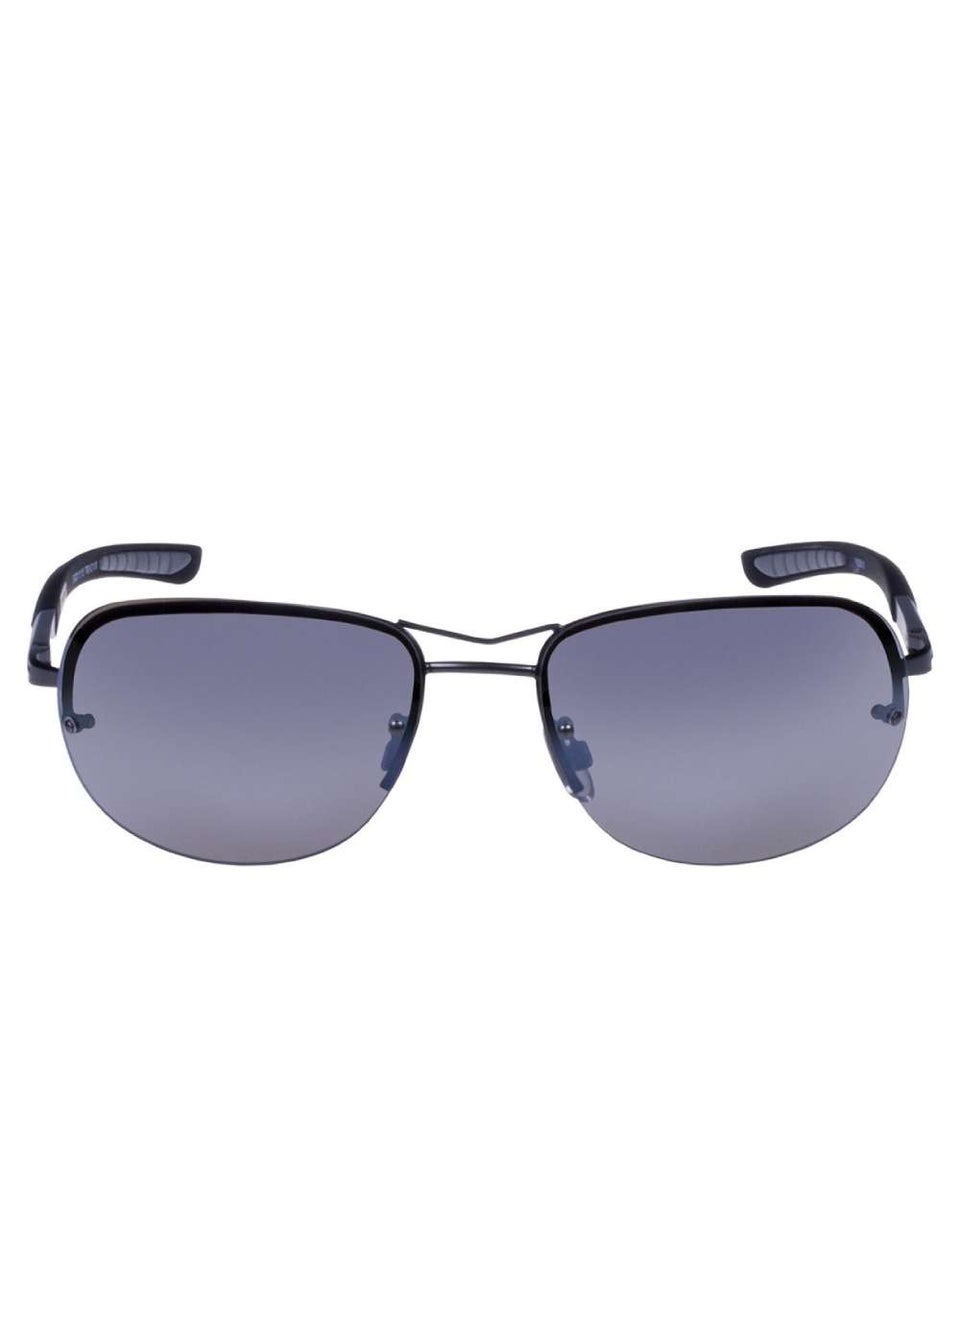 Foster Grant TR 20 01 Sunglasses | Walgreens